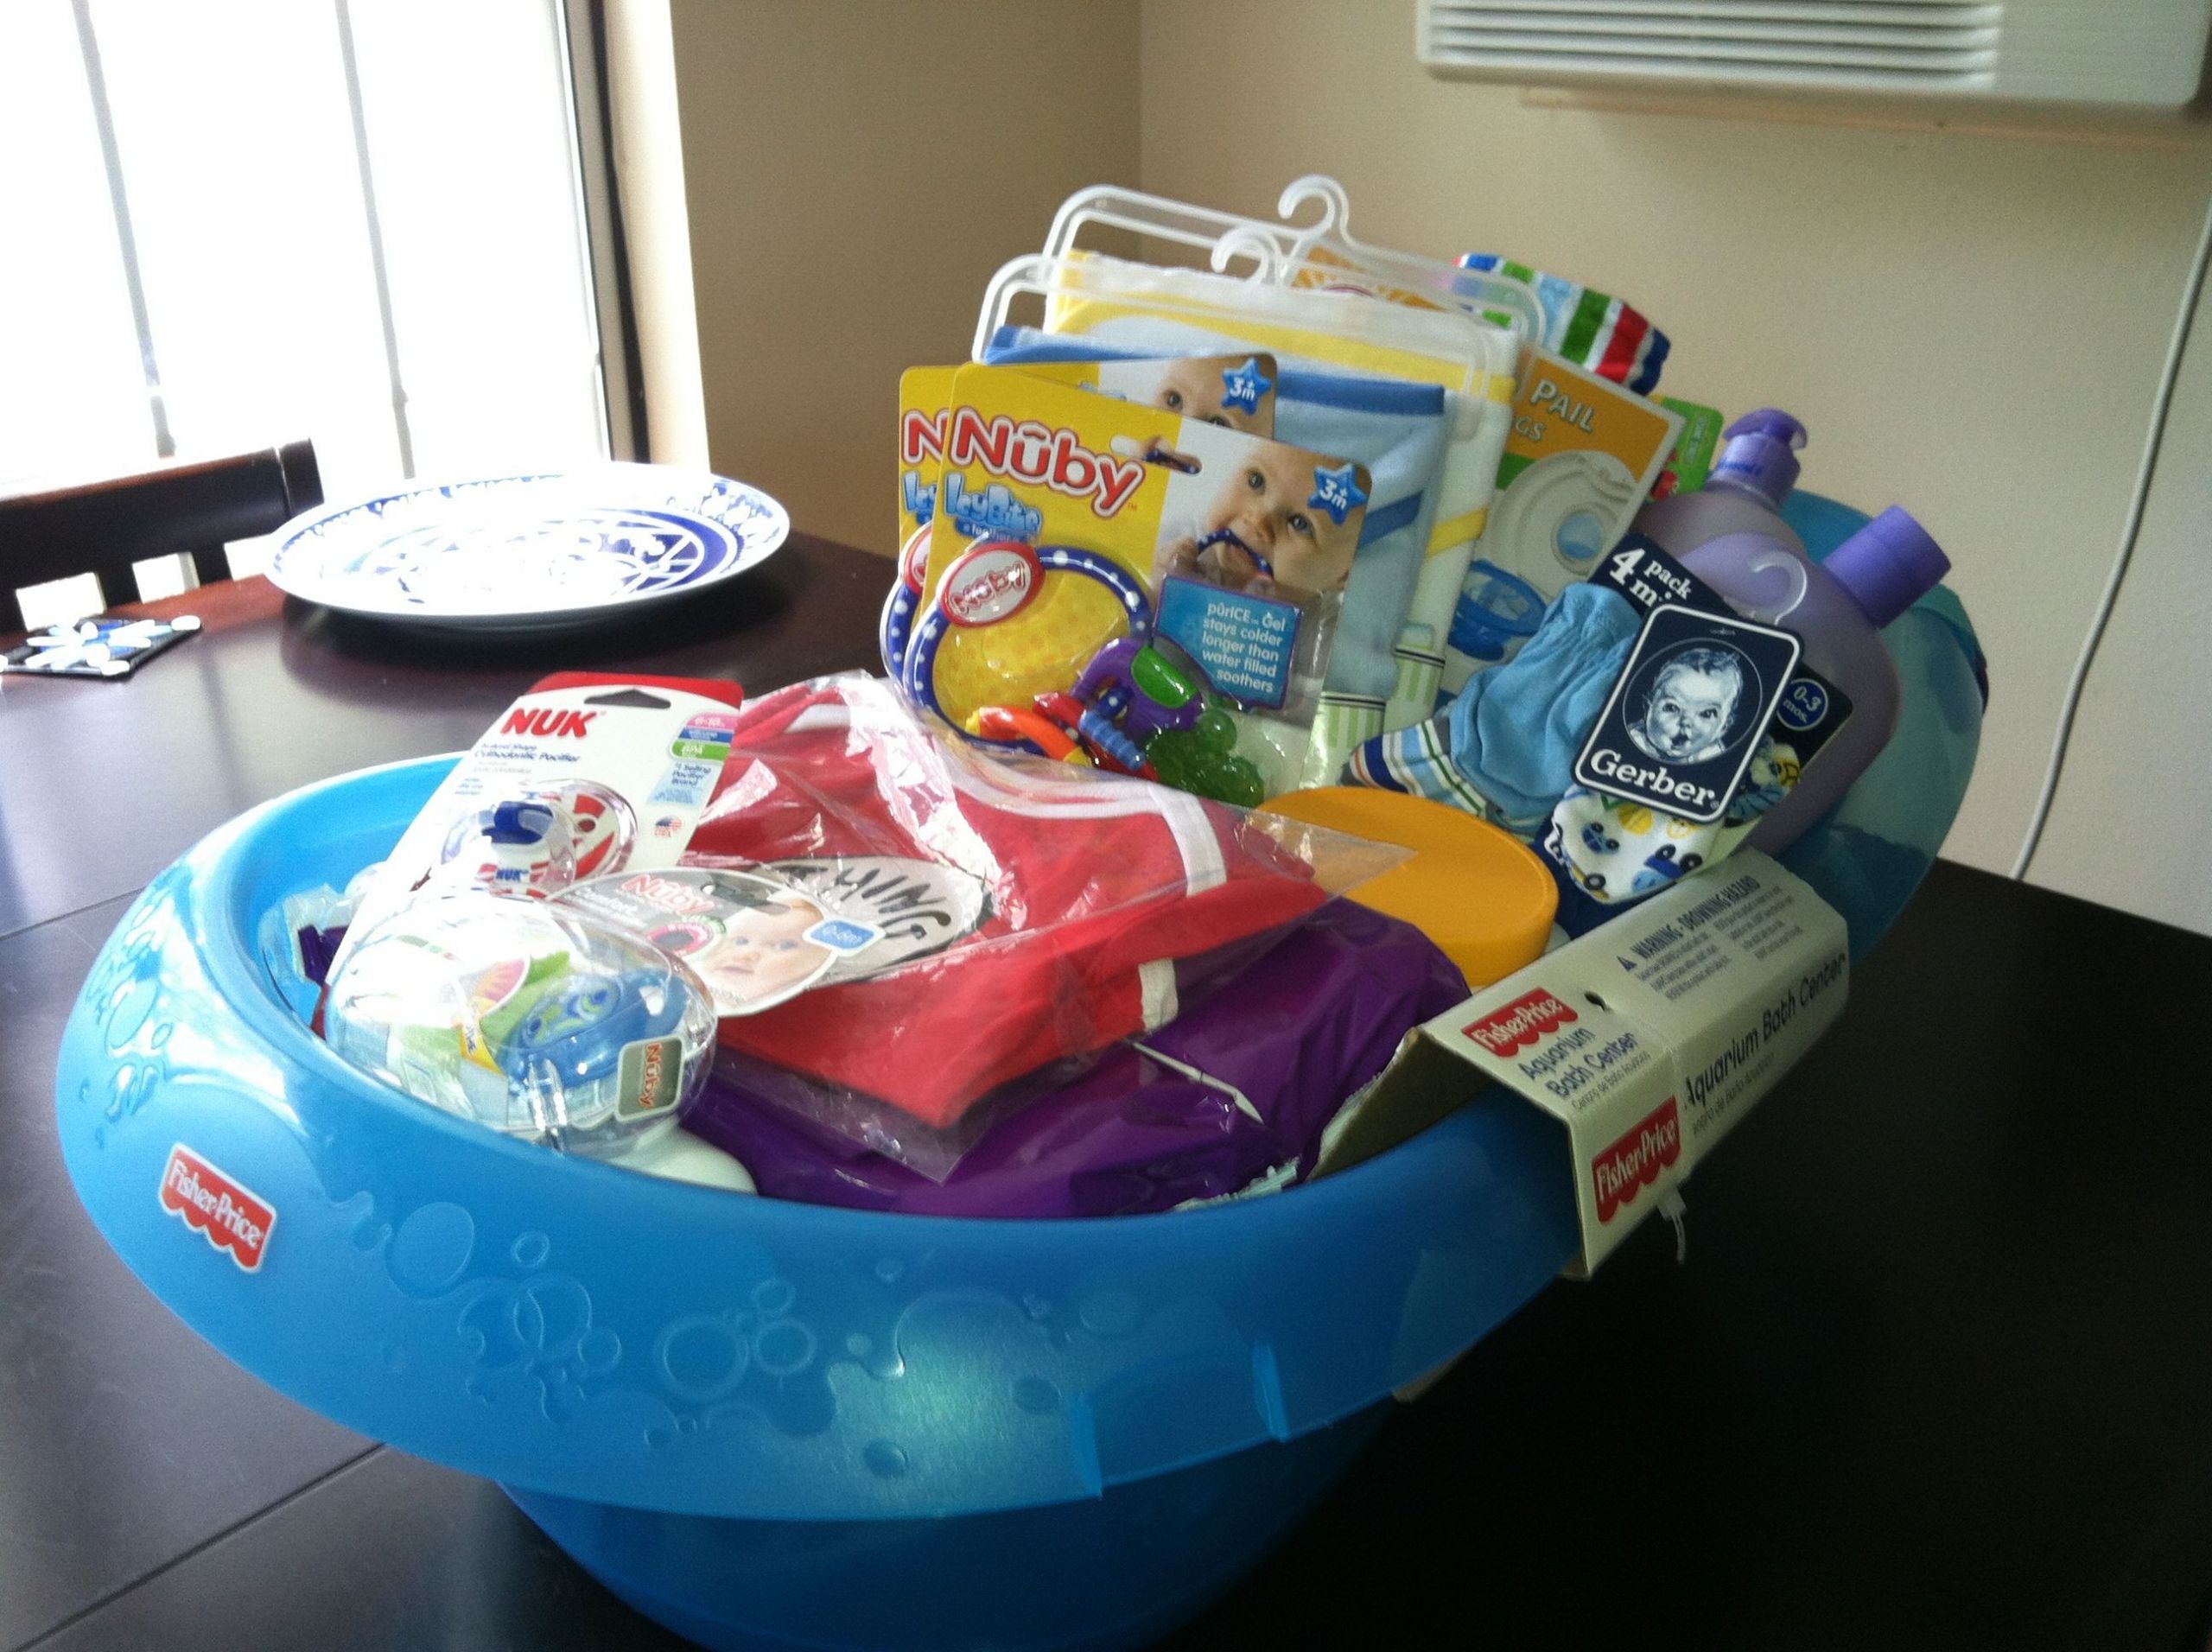 Baby Bath Tub Gift Ideas
 Pin on Gift baskets Gotta Love Them